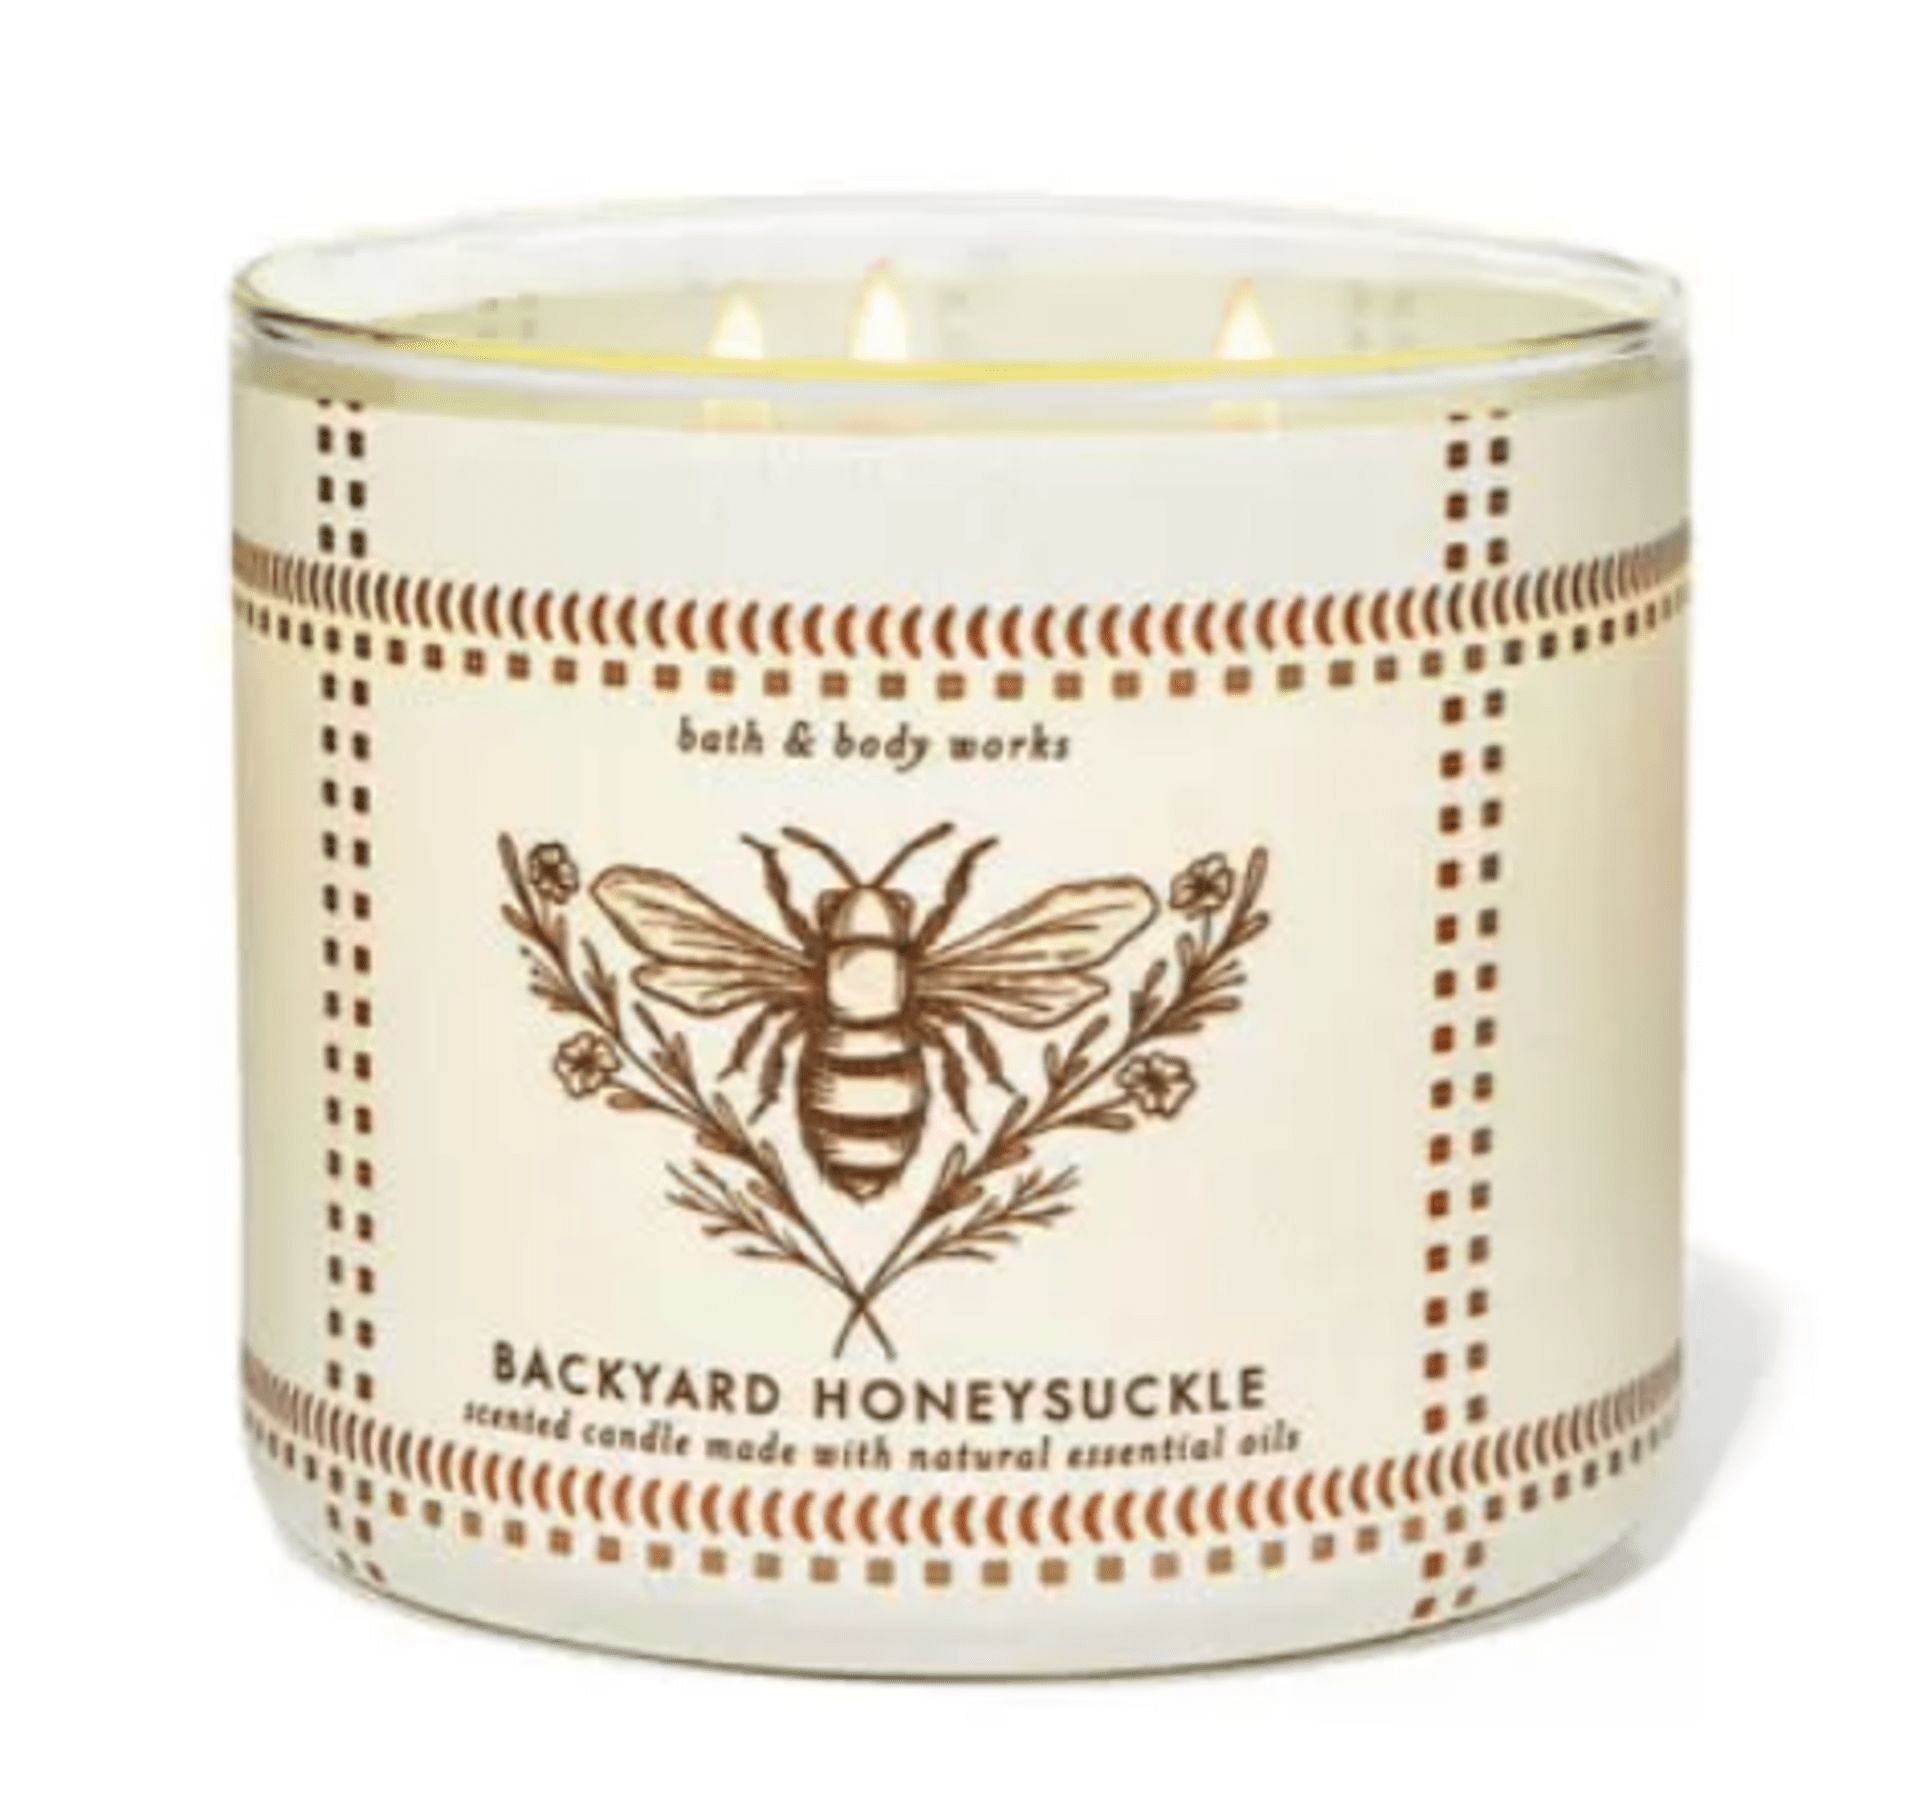 Honeysuckle scent (Image via Bath and Body Works)